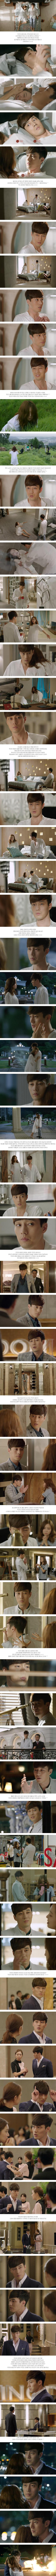 episode 4 captures for the Korean drama 'Master's Sun'